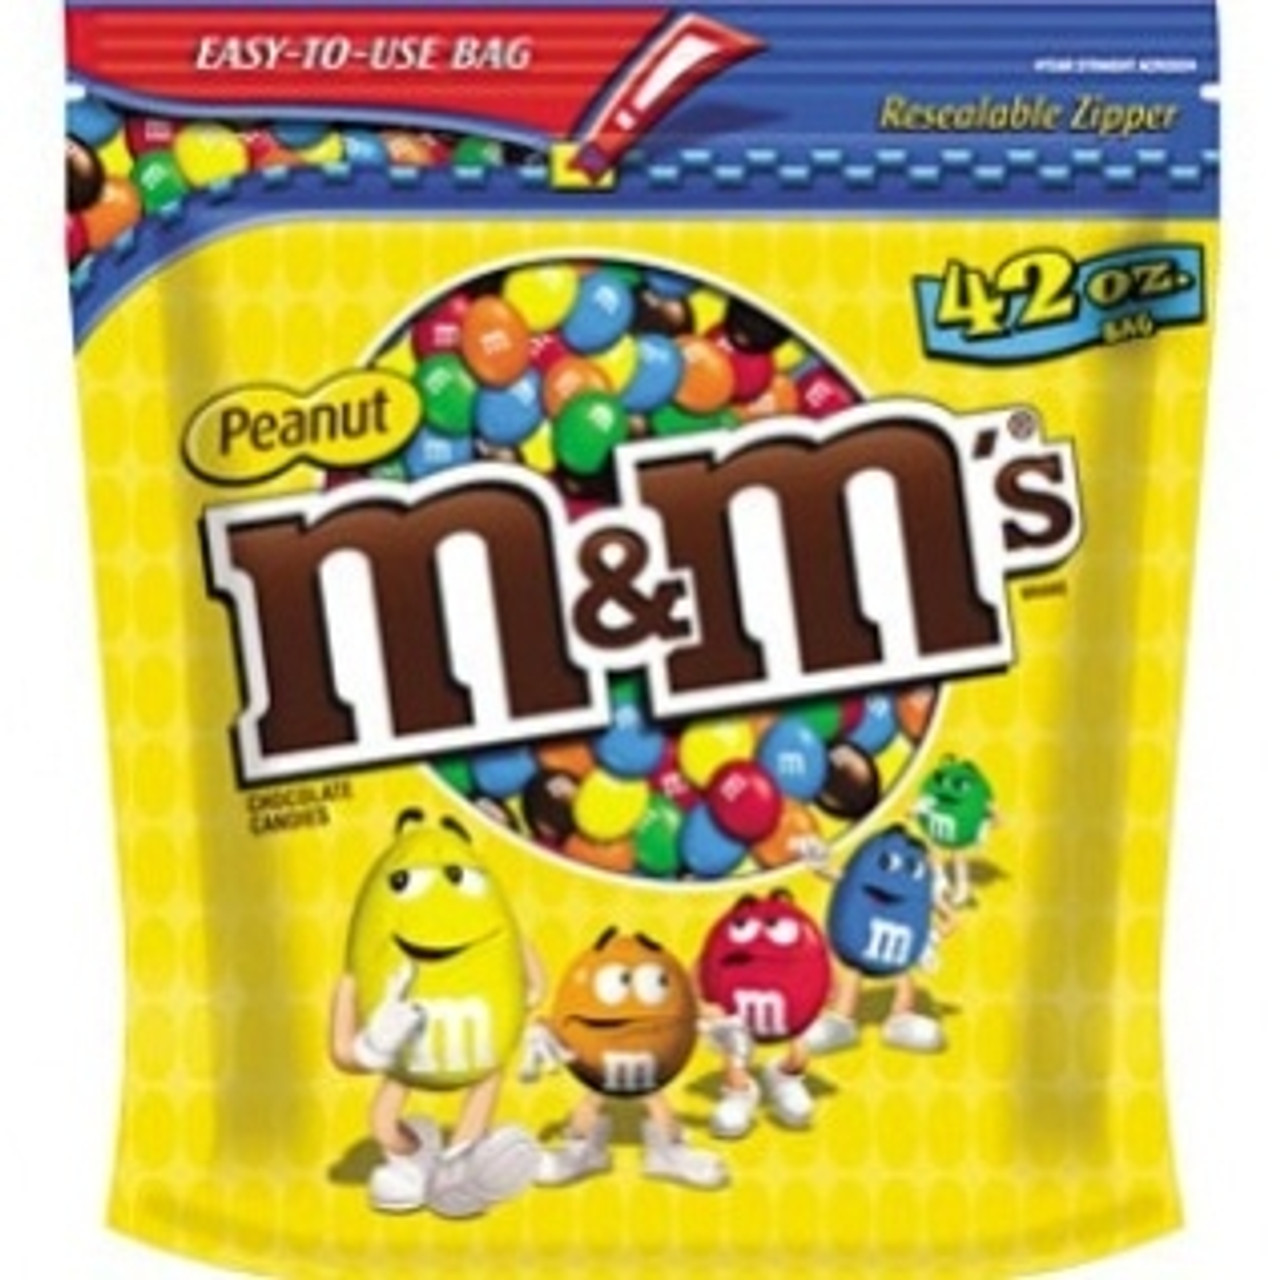 M&M's with Peanuts, 38oz Bag